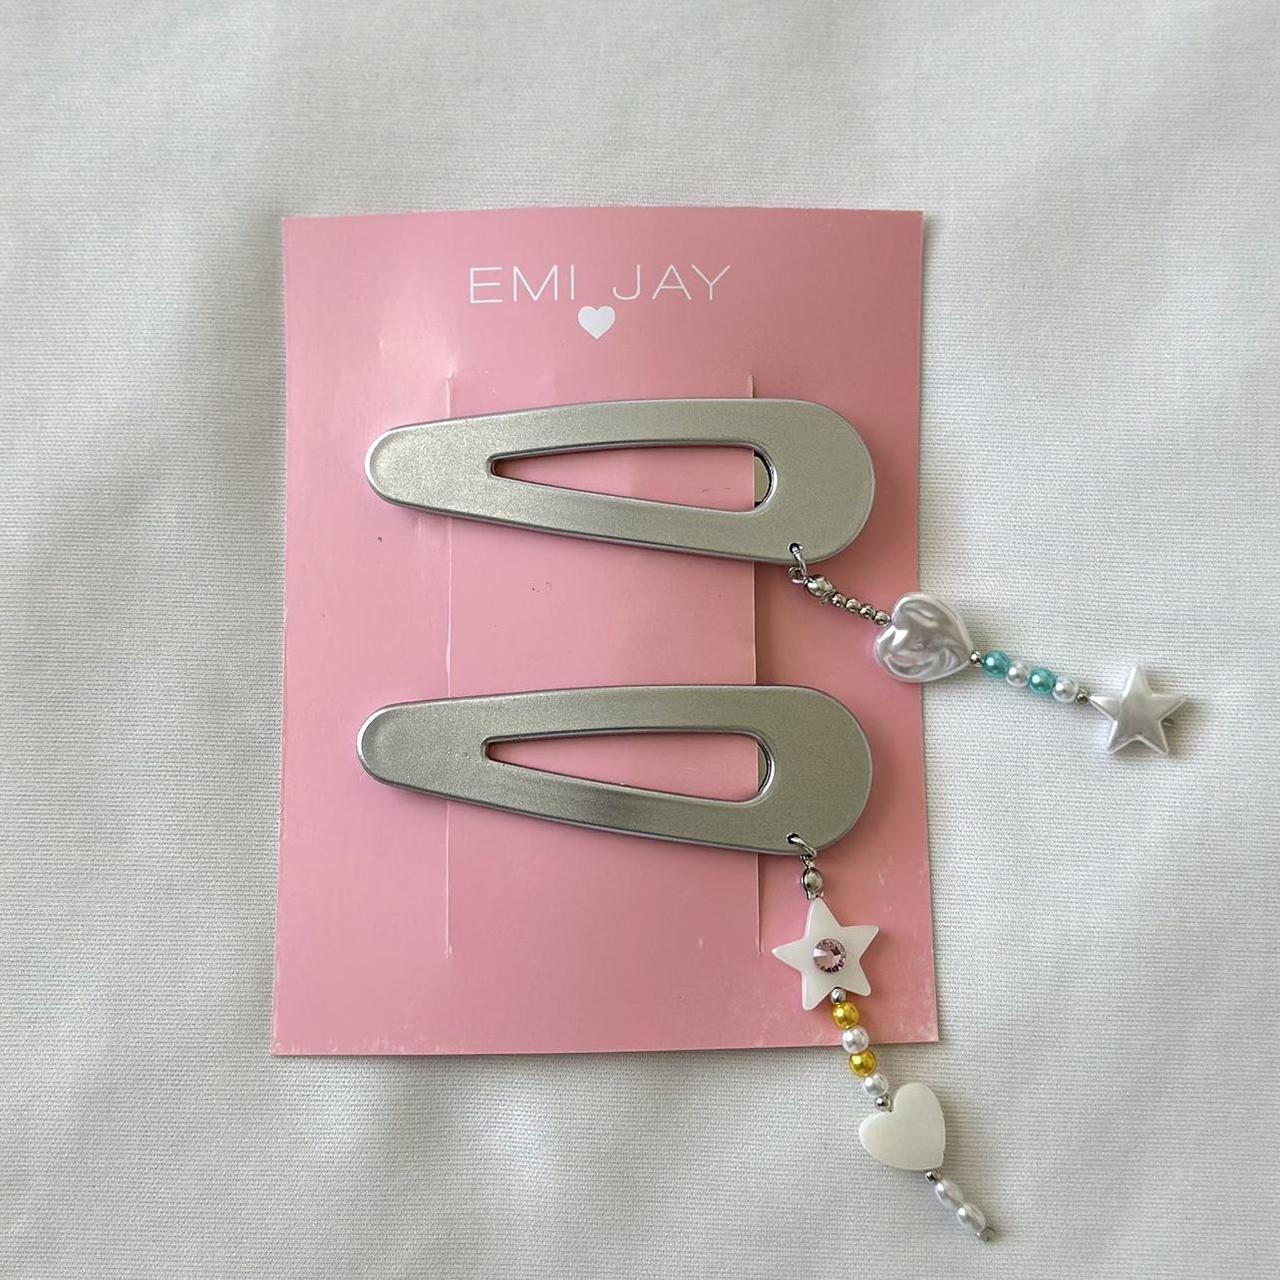 Emi Jay Women's Hair-accessories (2)